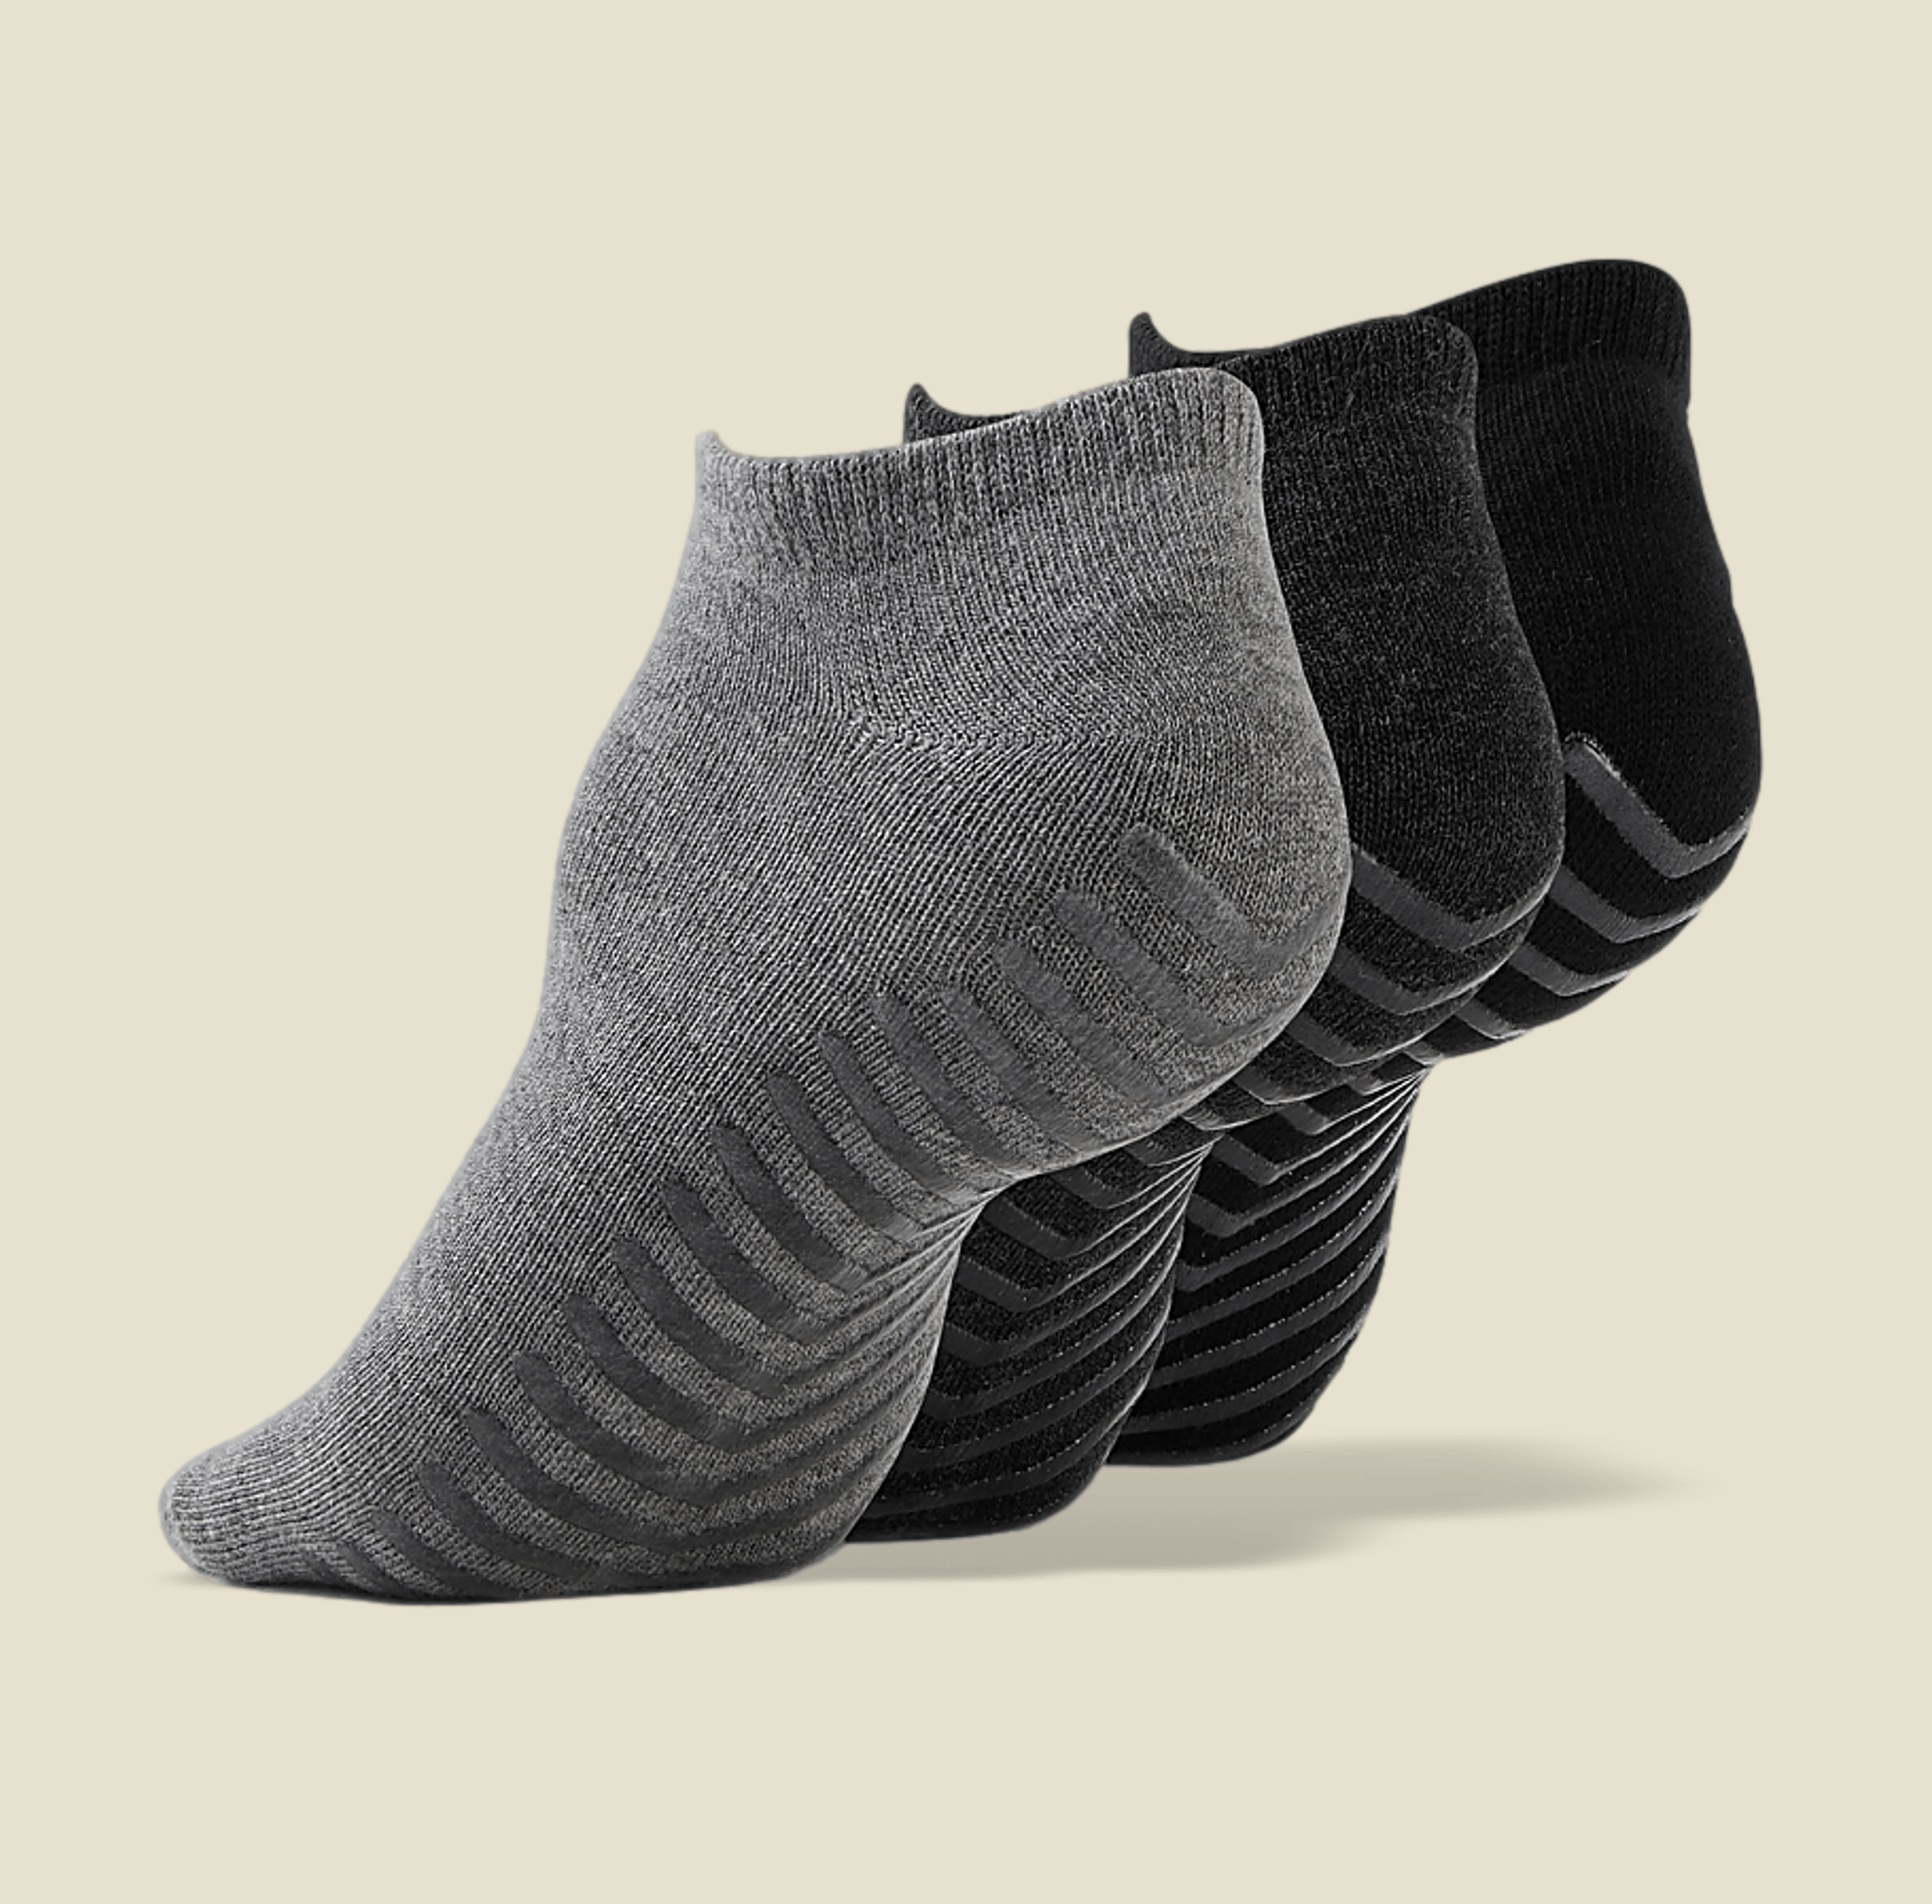 Women's Black/Grey Low Cut Ankle Non Skid Socks - 3 pairs - Gripjoy Socks